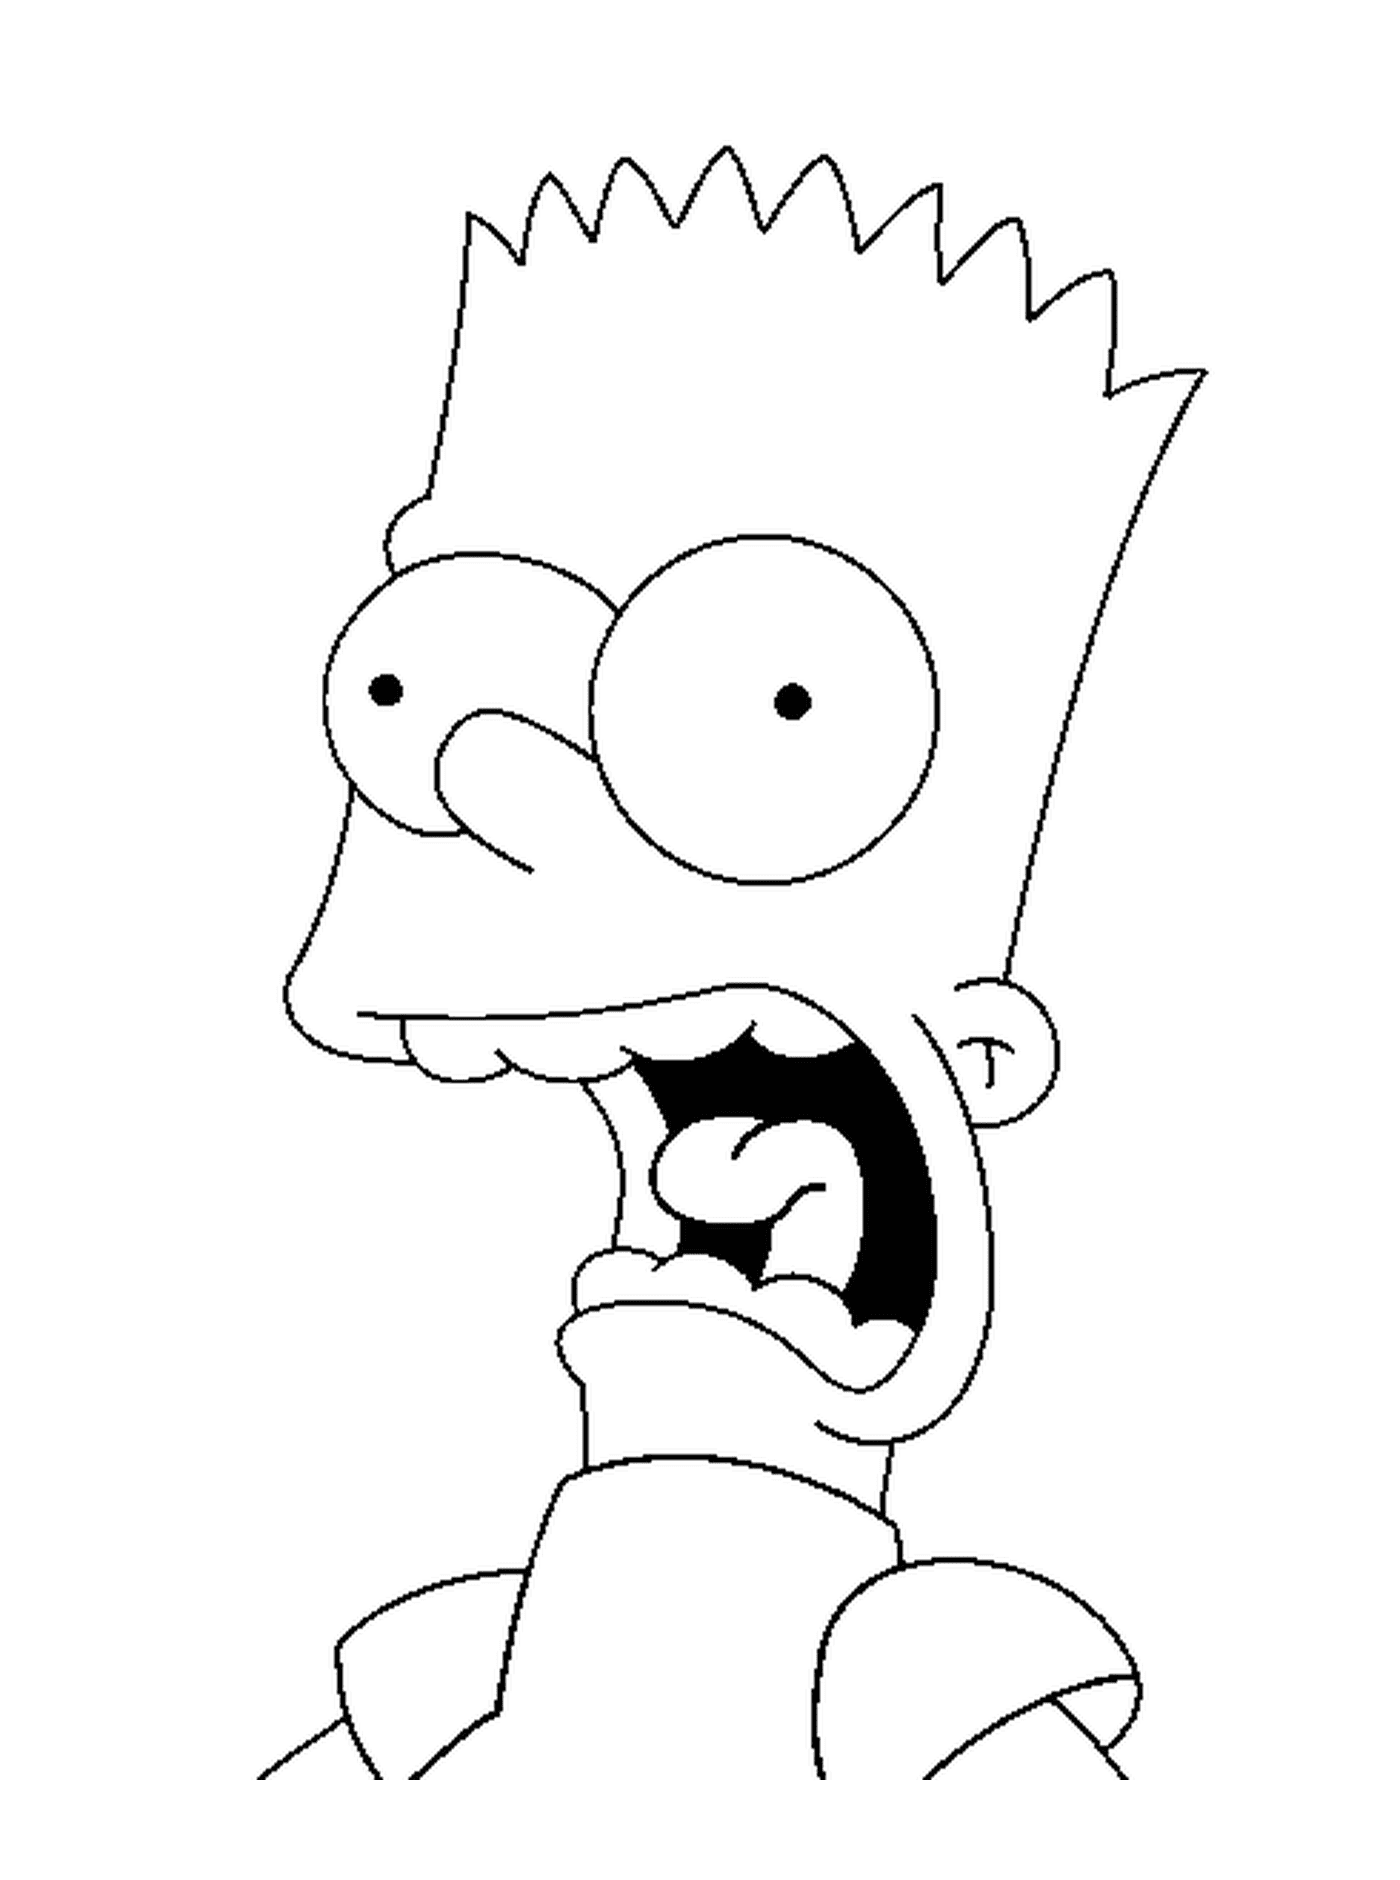  Bart grita com medo 